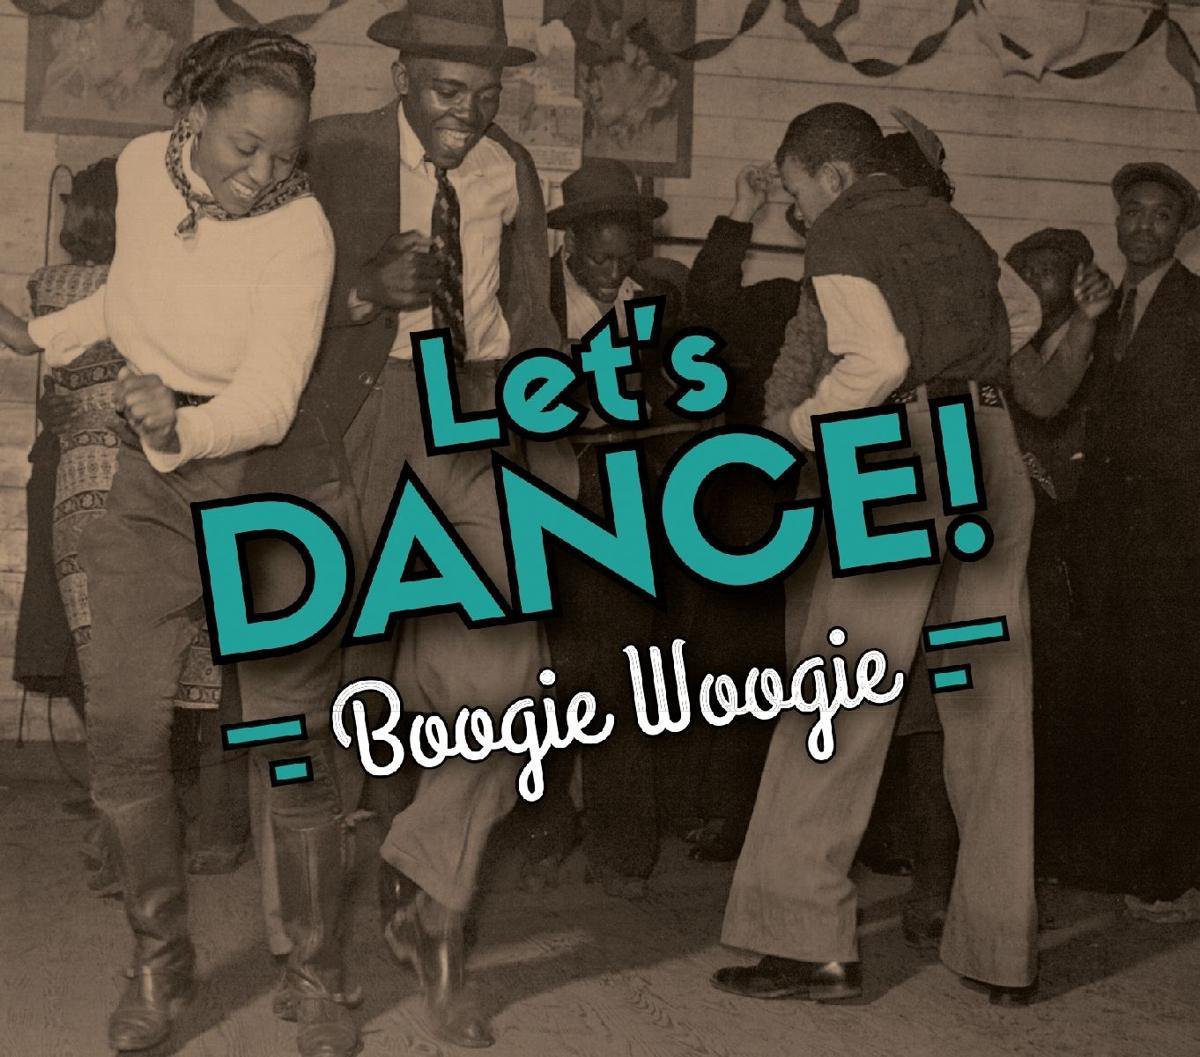 Boogie down dance. Boogaloo танец. Boogie Woogie Seniors. Livin' Blues - Boogie Woogie woman. Coo Coo Boogie Woogie.